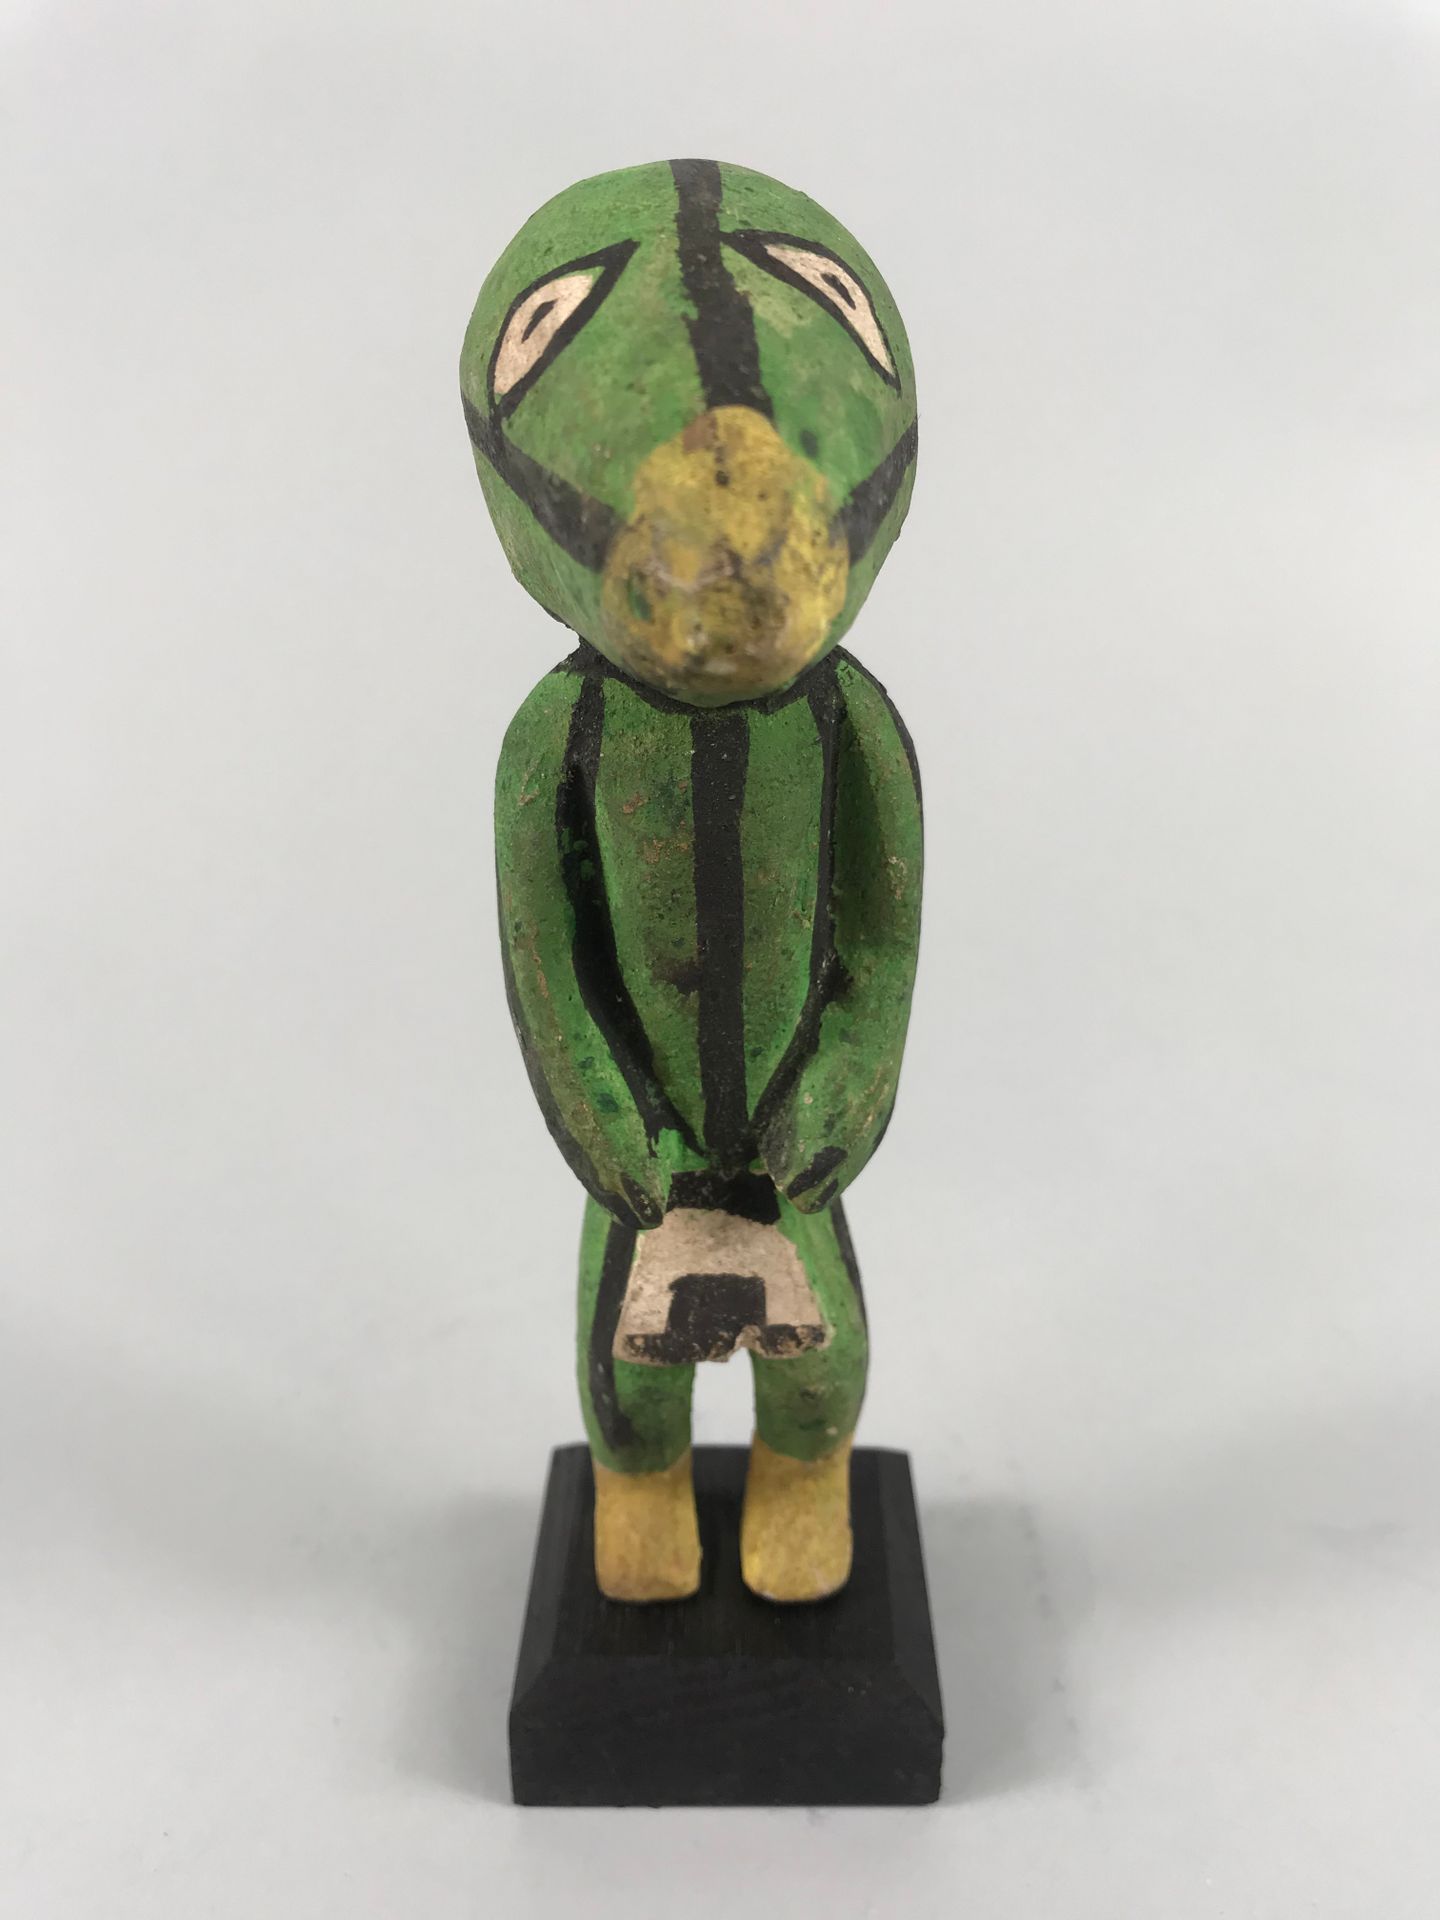 Null 雕像头像是卡奇纳娃娃的南瓜形状，是古代霍皮印第安人的精神与祖先神话的风格和灵感的关系。雕刻的木头和多色性。

高度：14厘米。高度：14厘米。

 (&hellip;